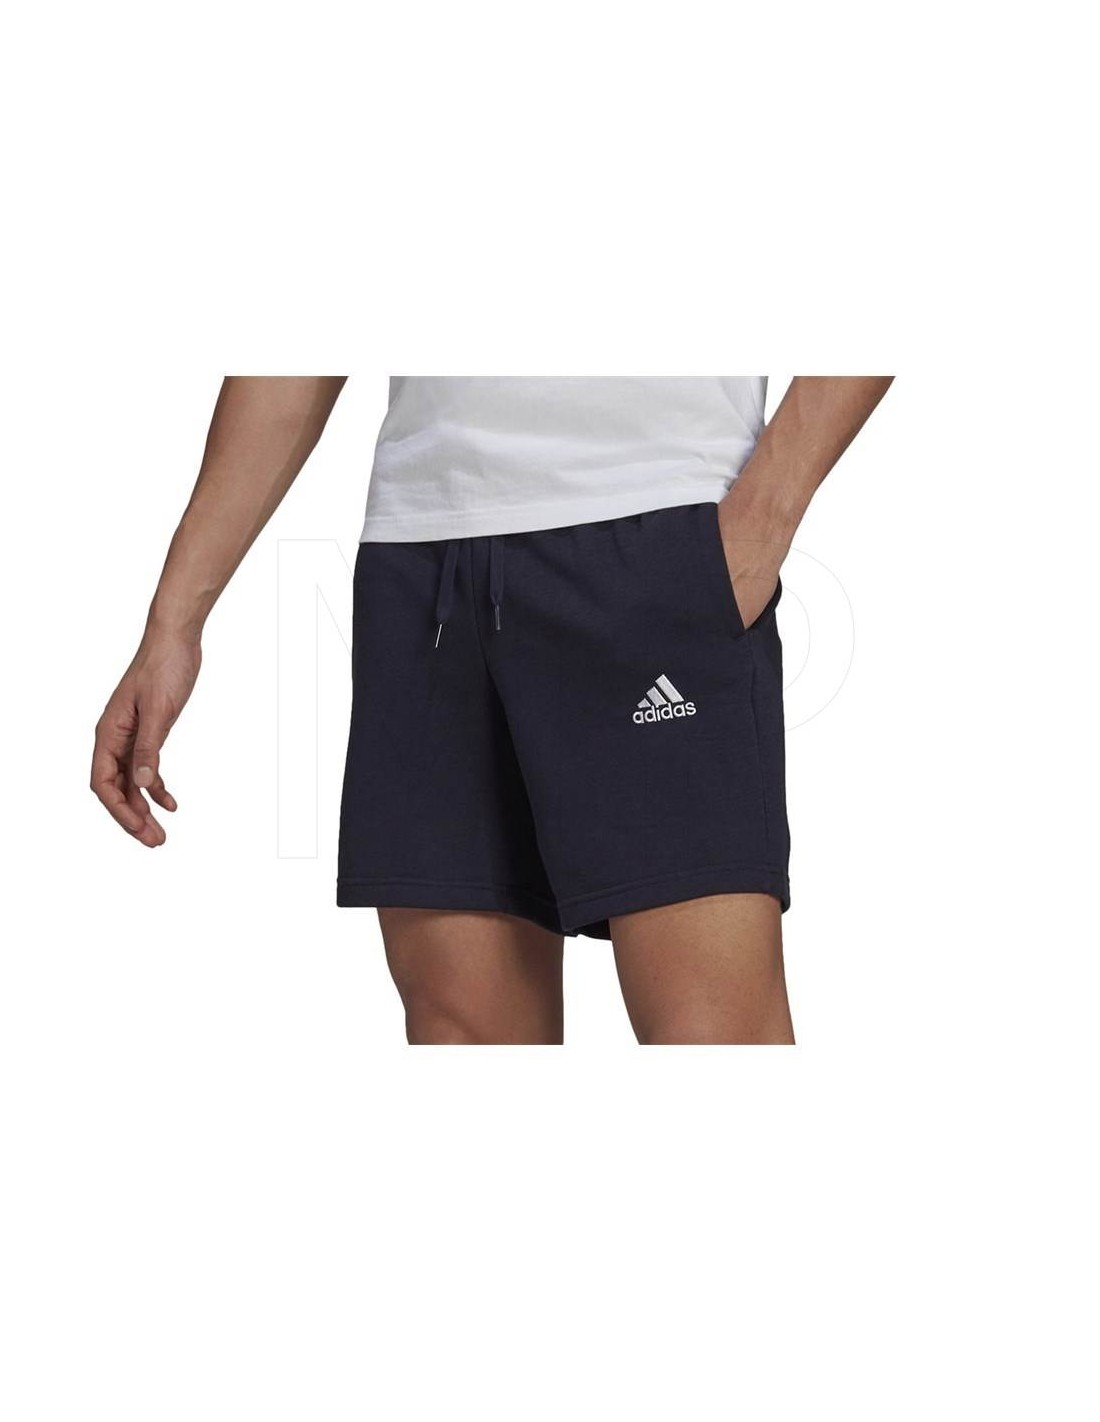 igual Mentor Inspiración Adidas pantalón corto Essentials French Terry logotipo pequeño Talla S  Color LEGINK/WHITE